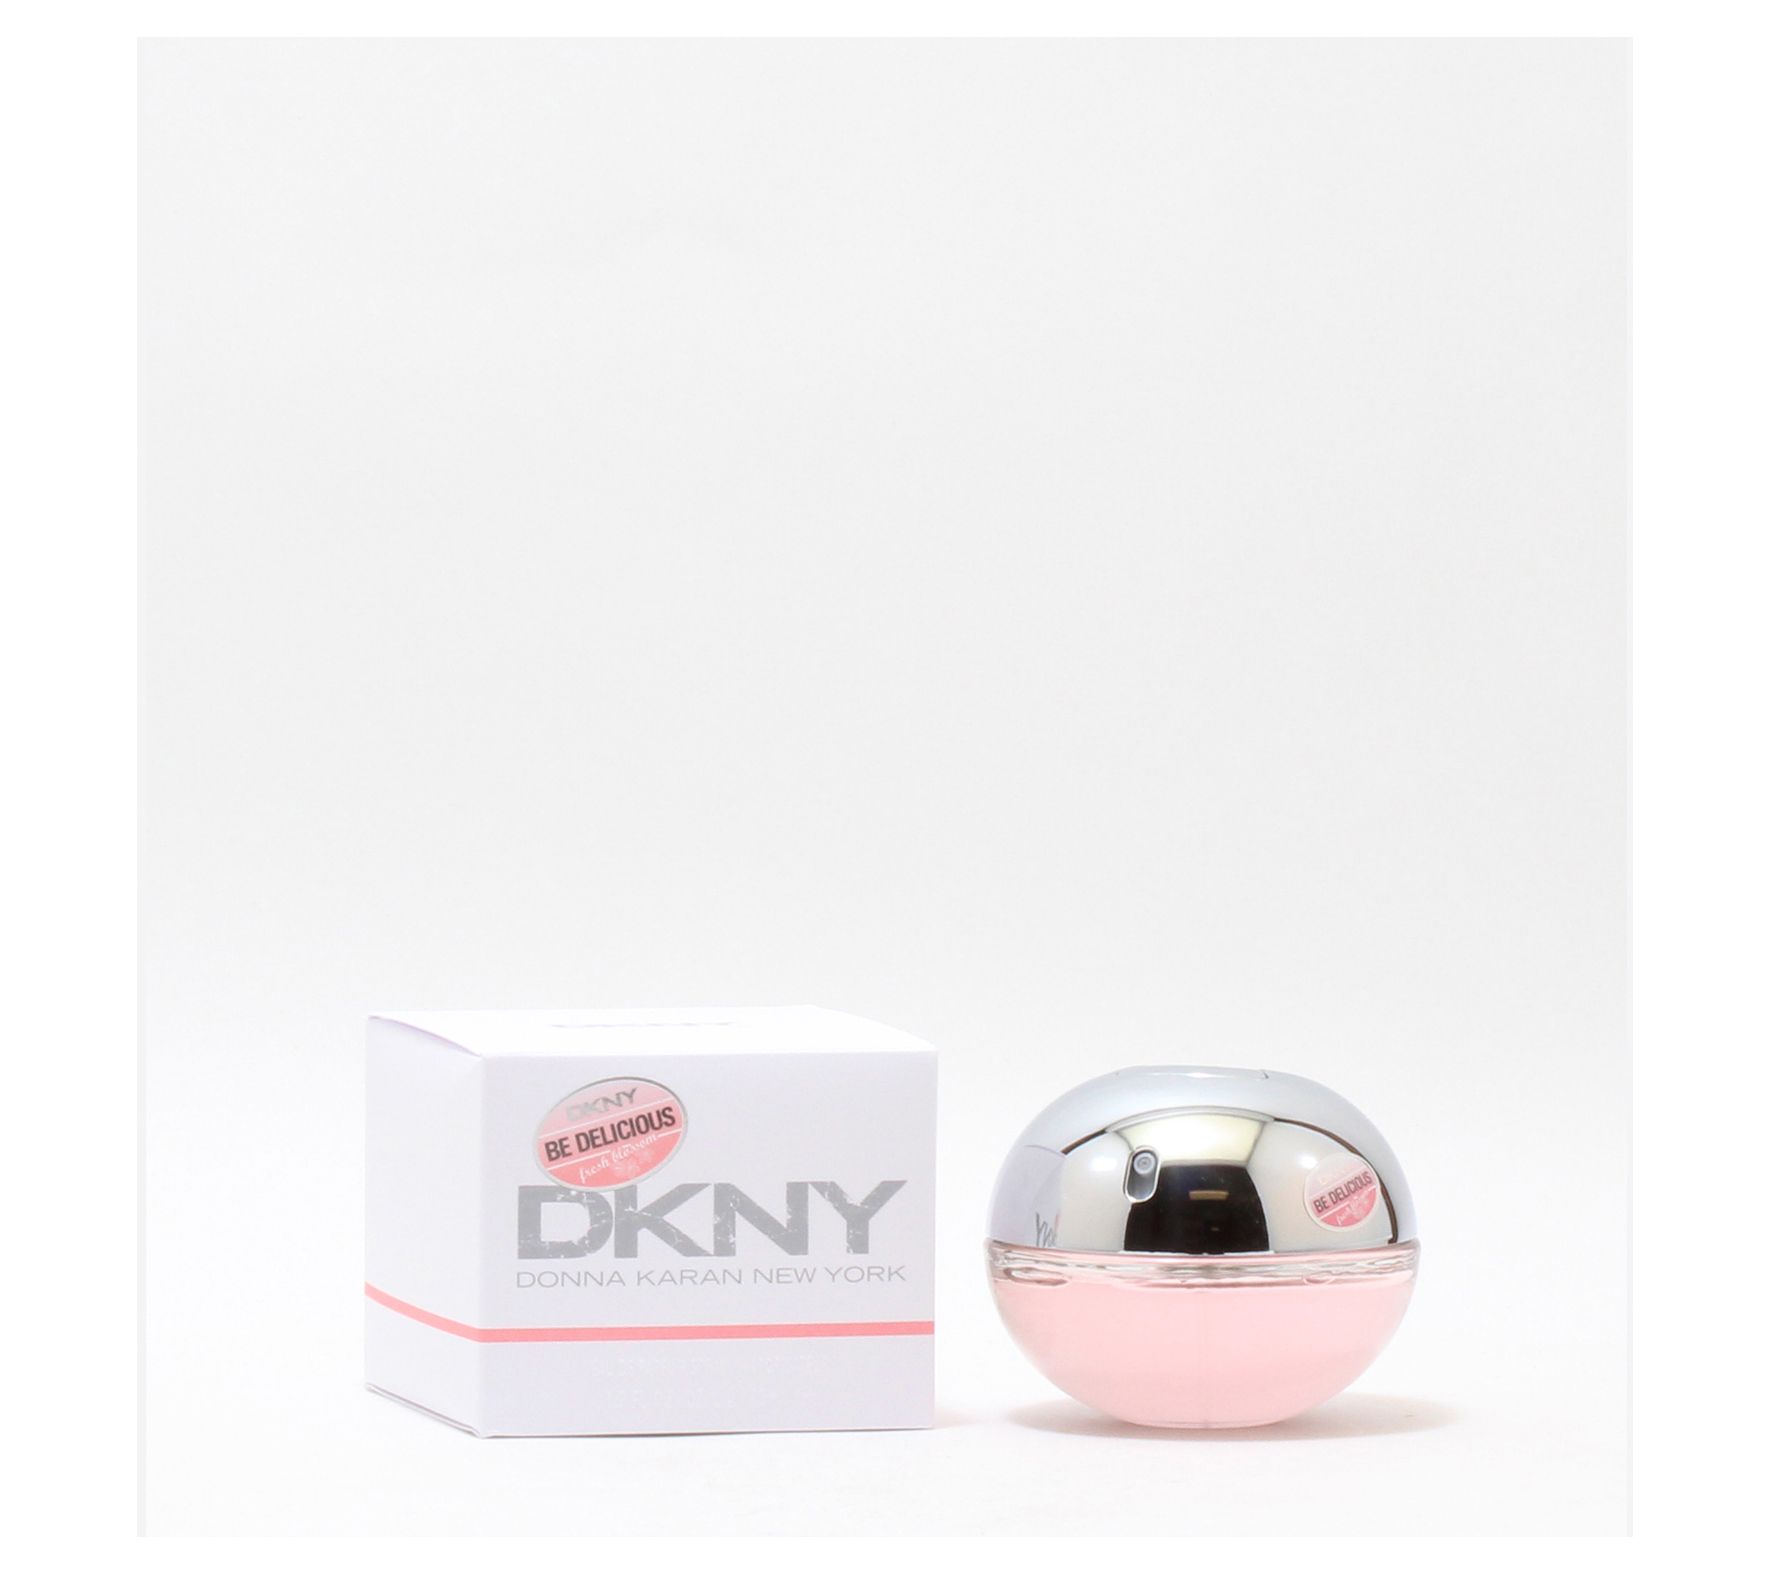 Be Delicious Fresh Blossom by Donna Karan 1.7 oz Eau de Parfum Spray / Women